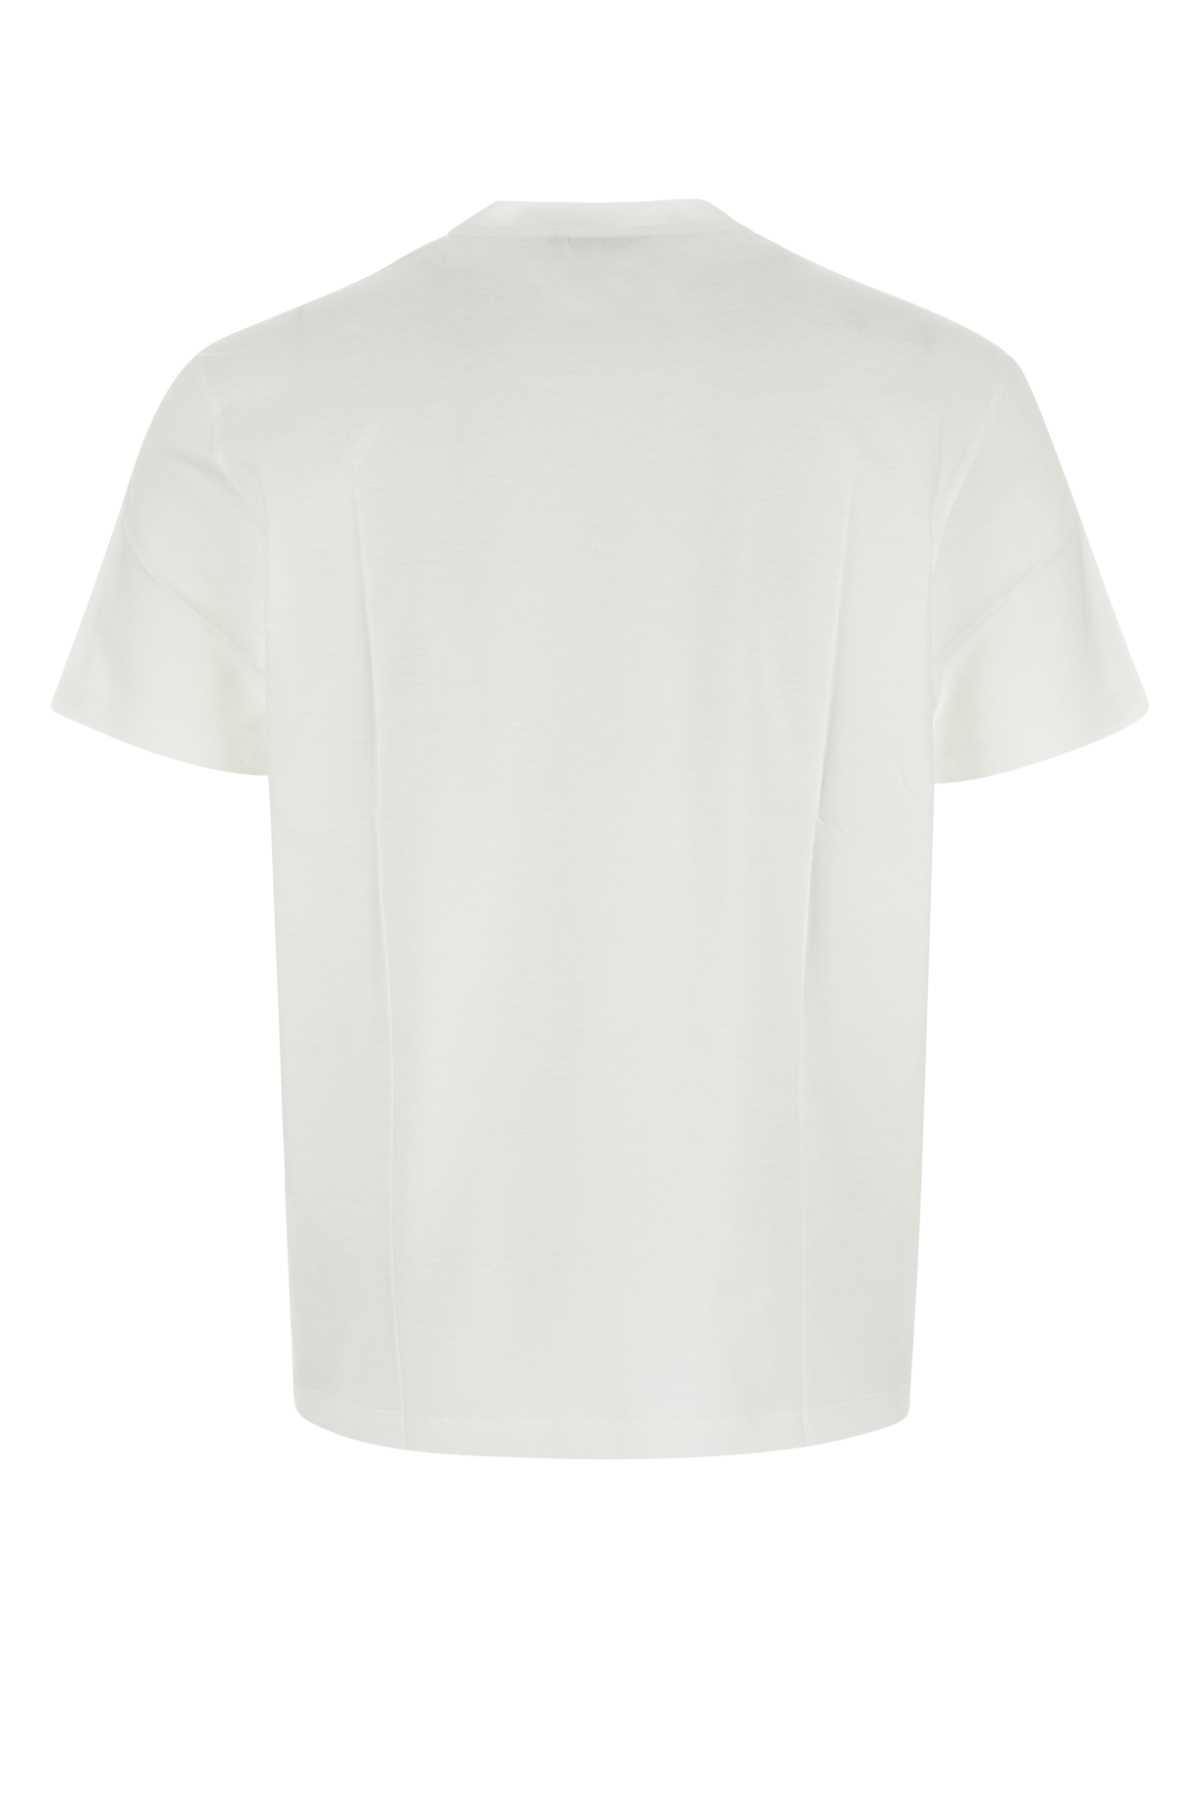 Versace White Cotton T-shirt In Biaott